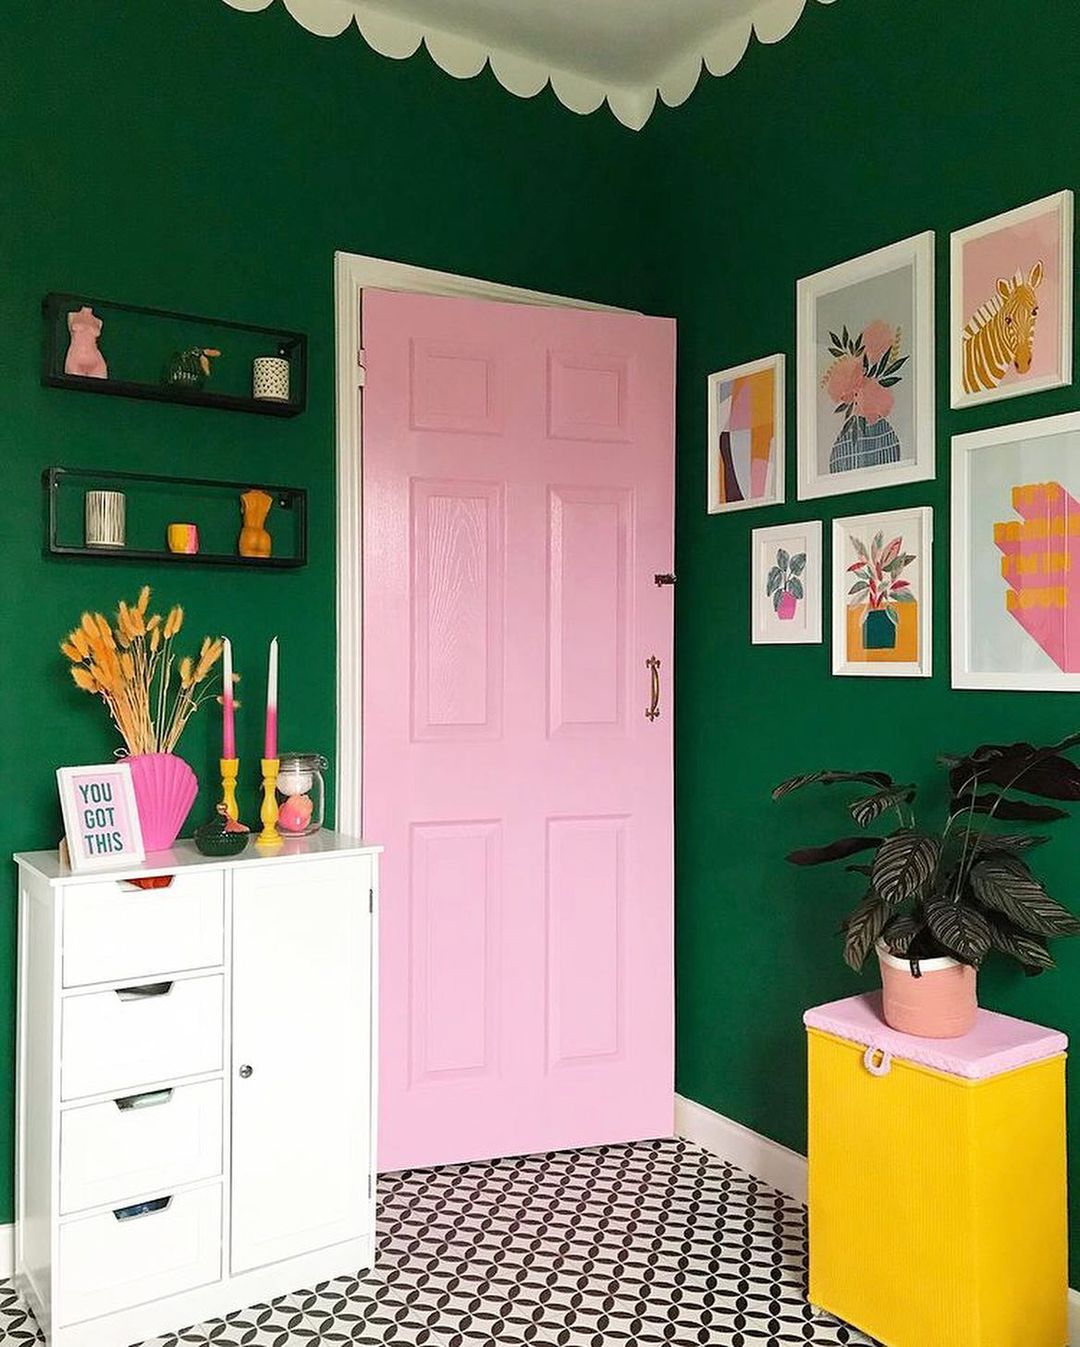 Bathroom Door Painted Pink with Dark Green Walls. Photo by Instagram user @nia_does_diy